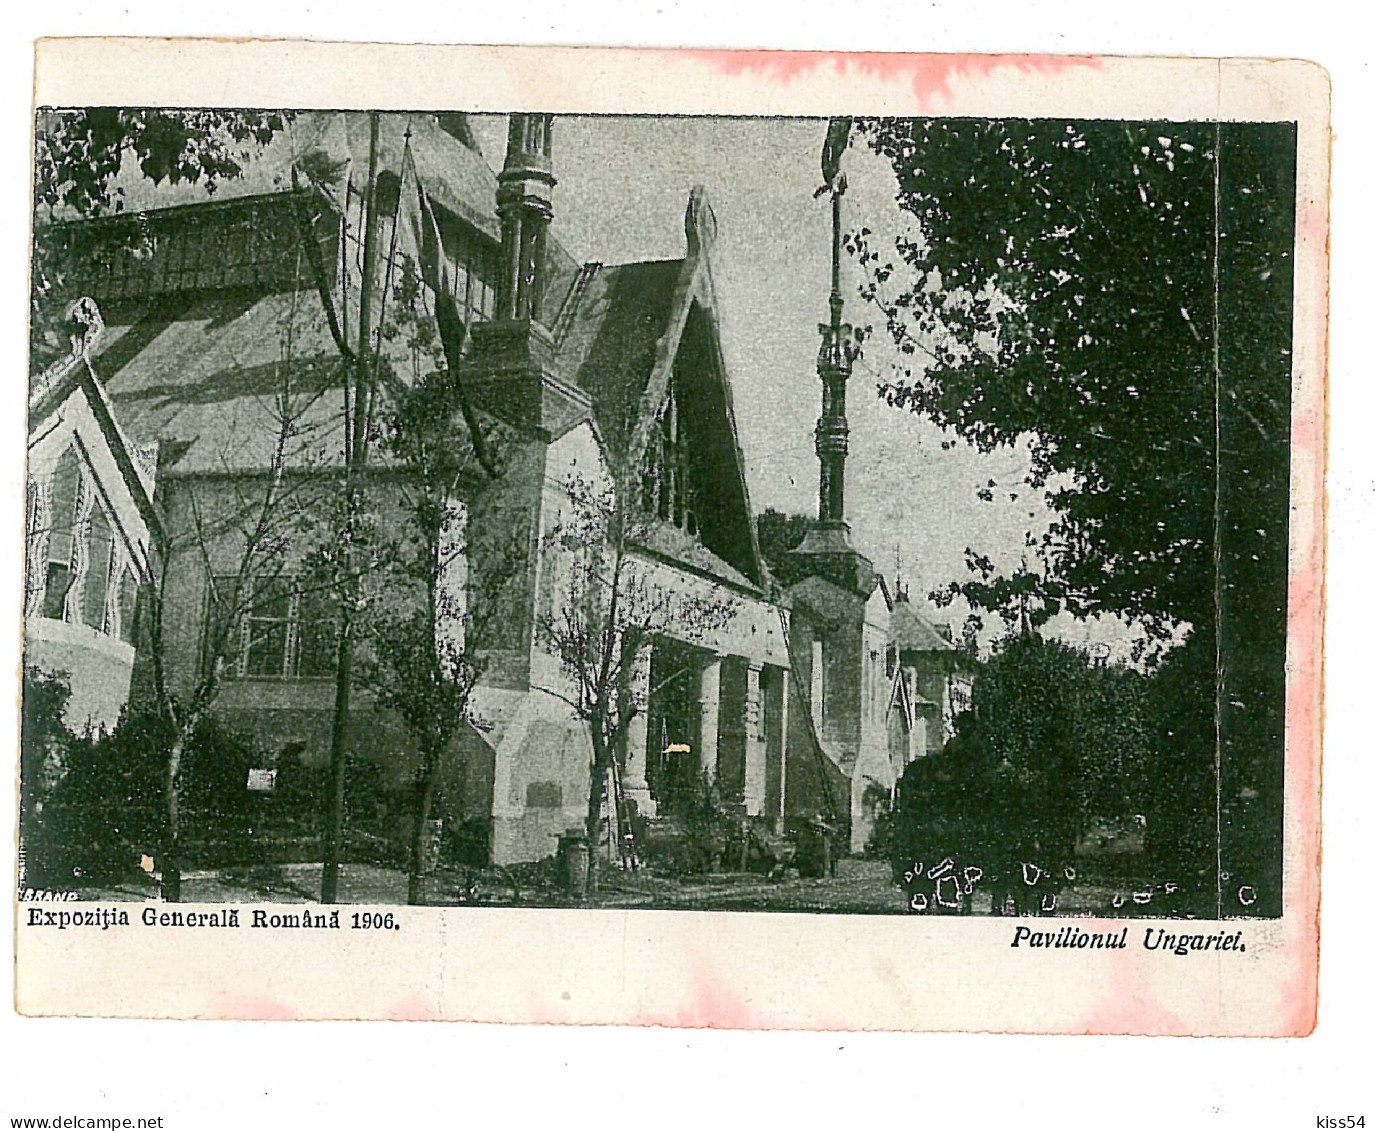 RO 45 - 9047 BUCURESTI, Expozitia Gen. Pavilionul Ungariei, Romania - Old Postcard - Unused - 1906 - Roemenië